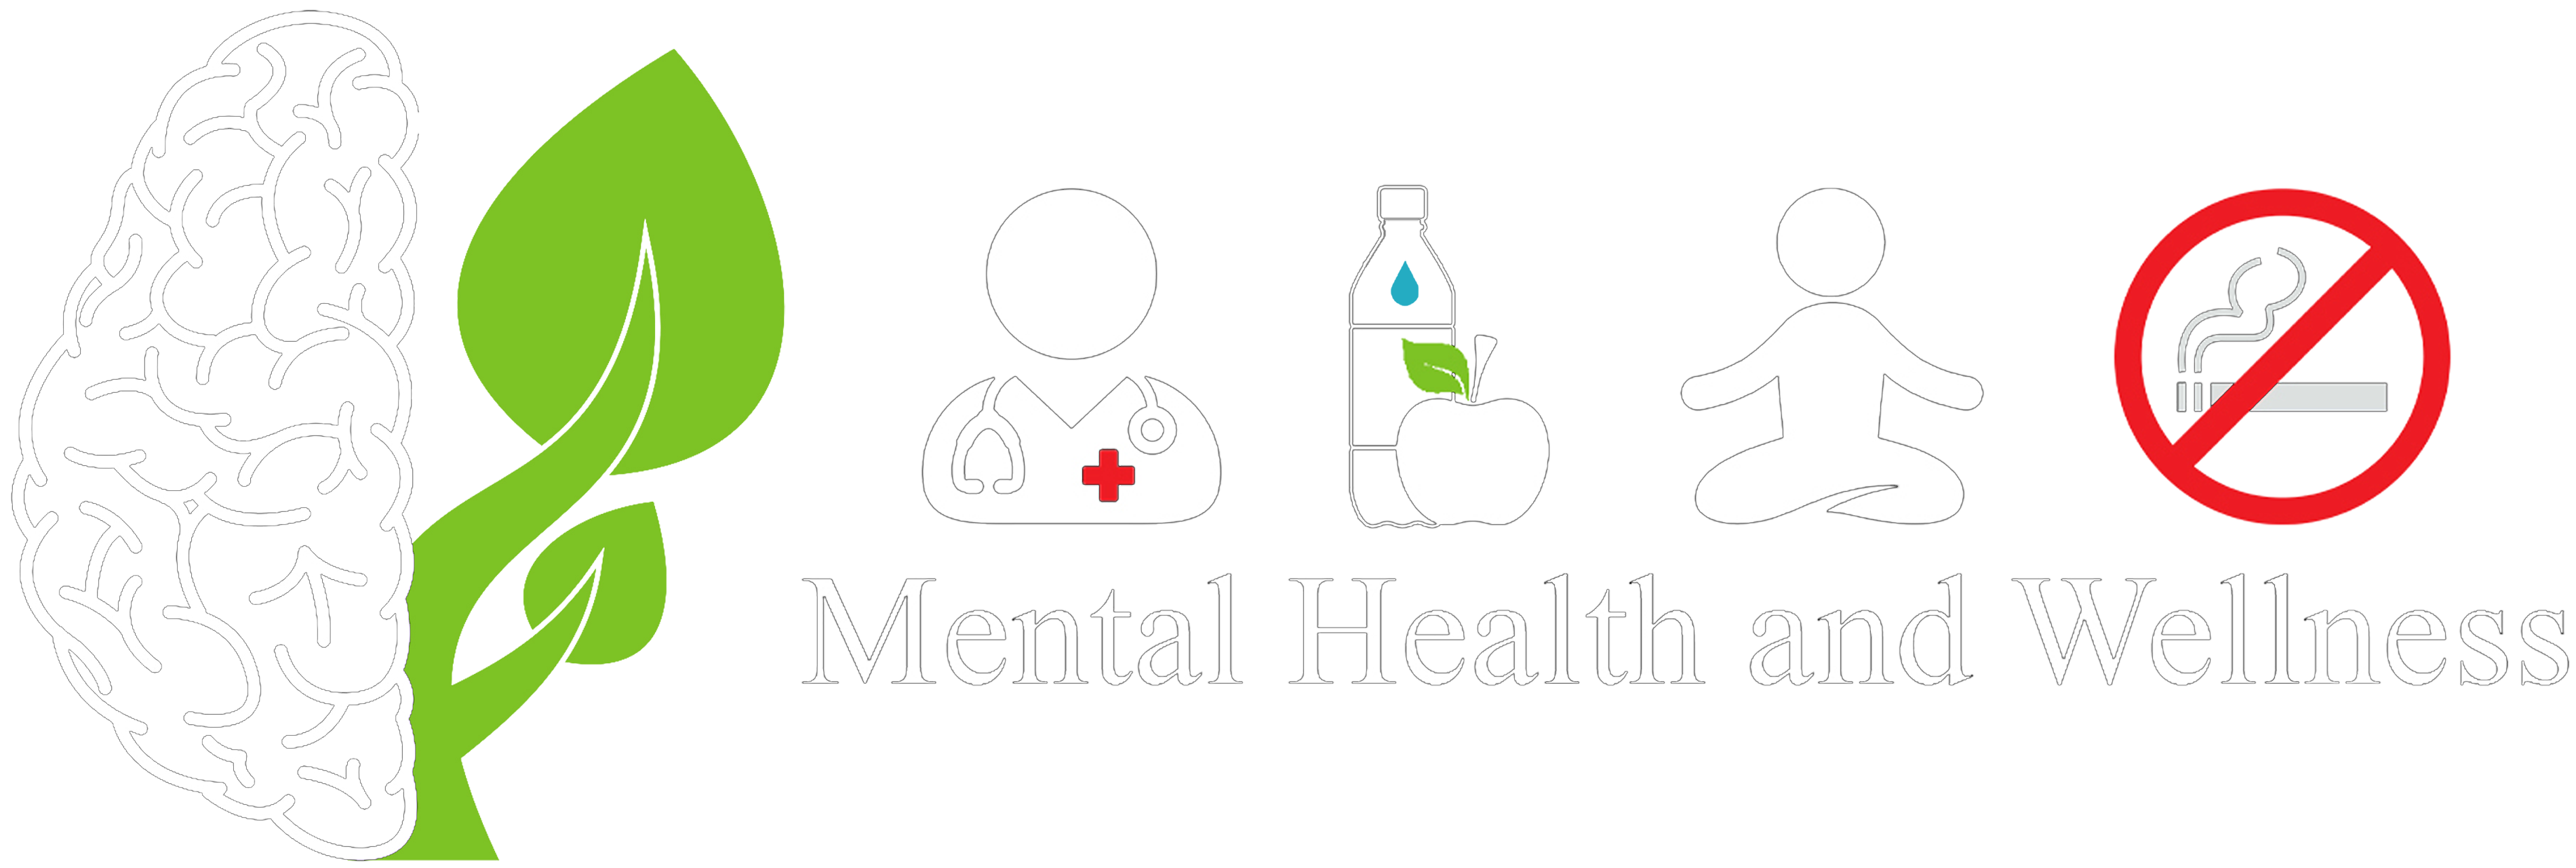 Mental Health and Wellness Community